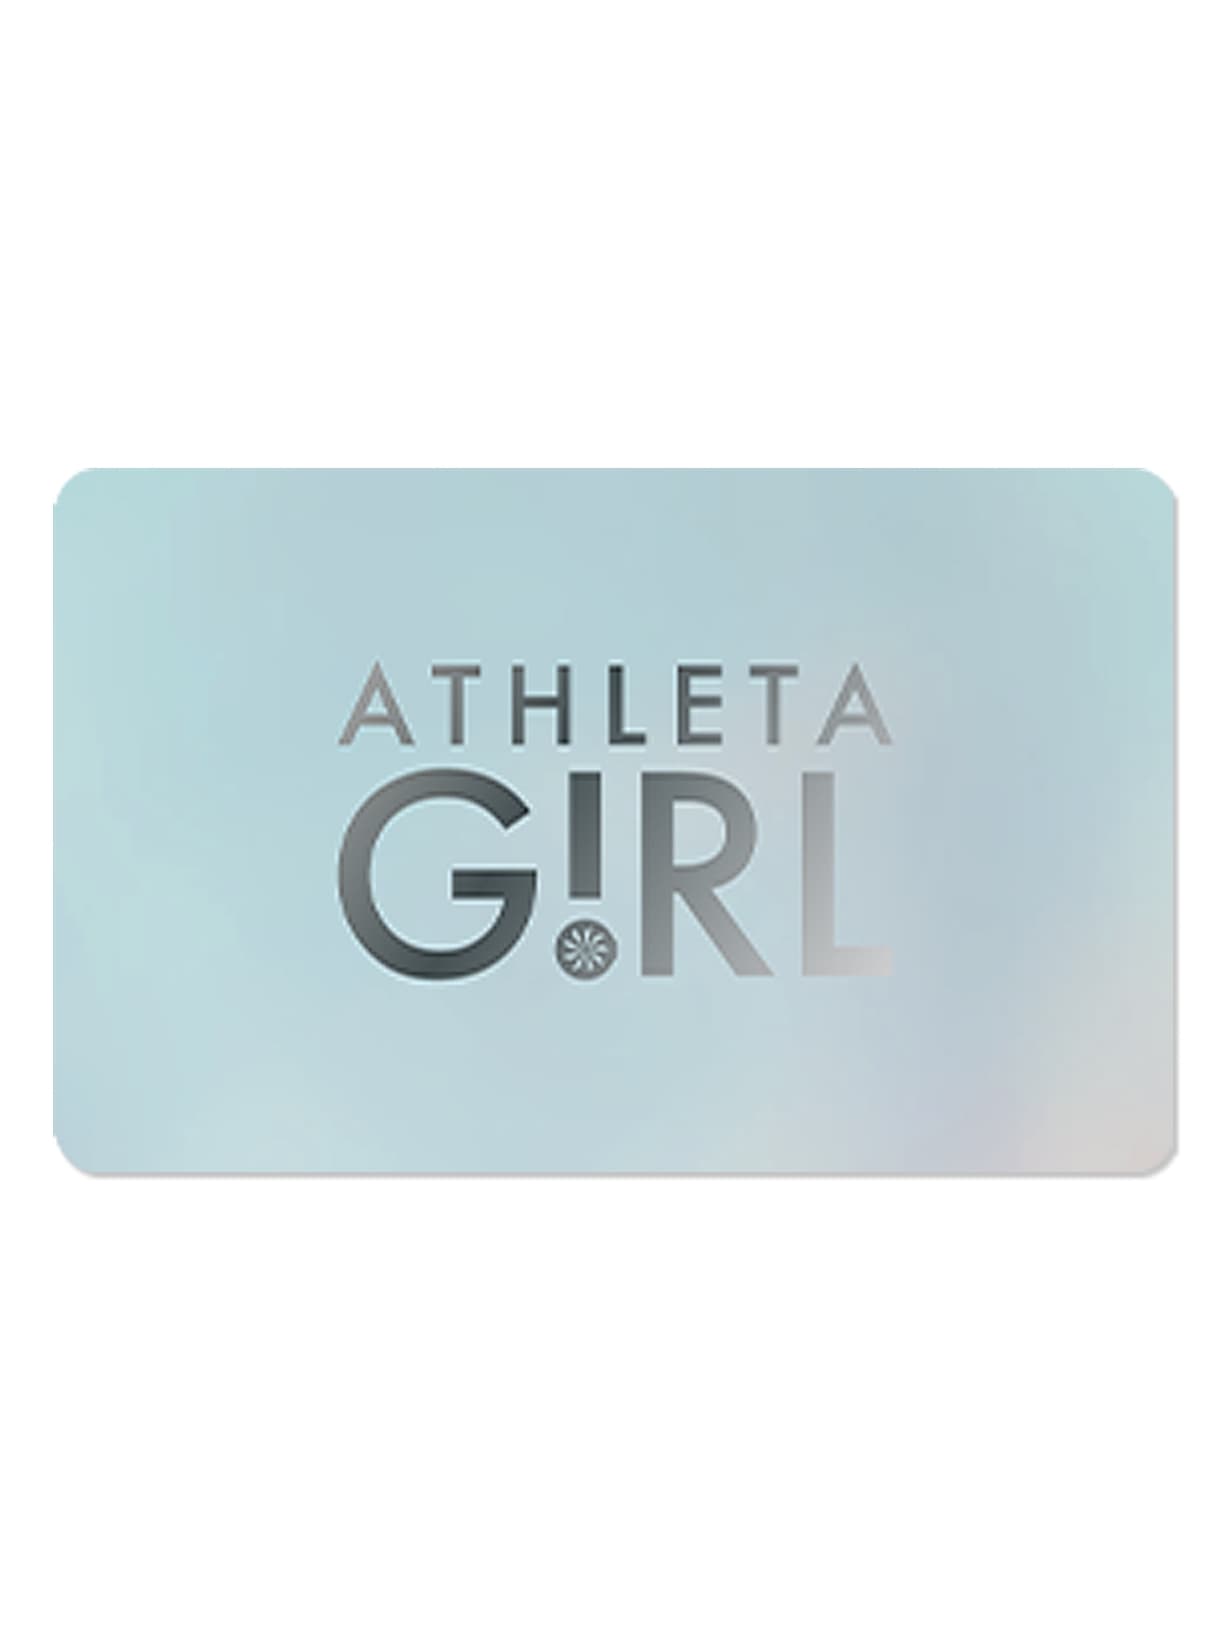 Athleta Girl Giftcard In Blue